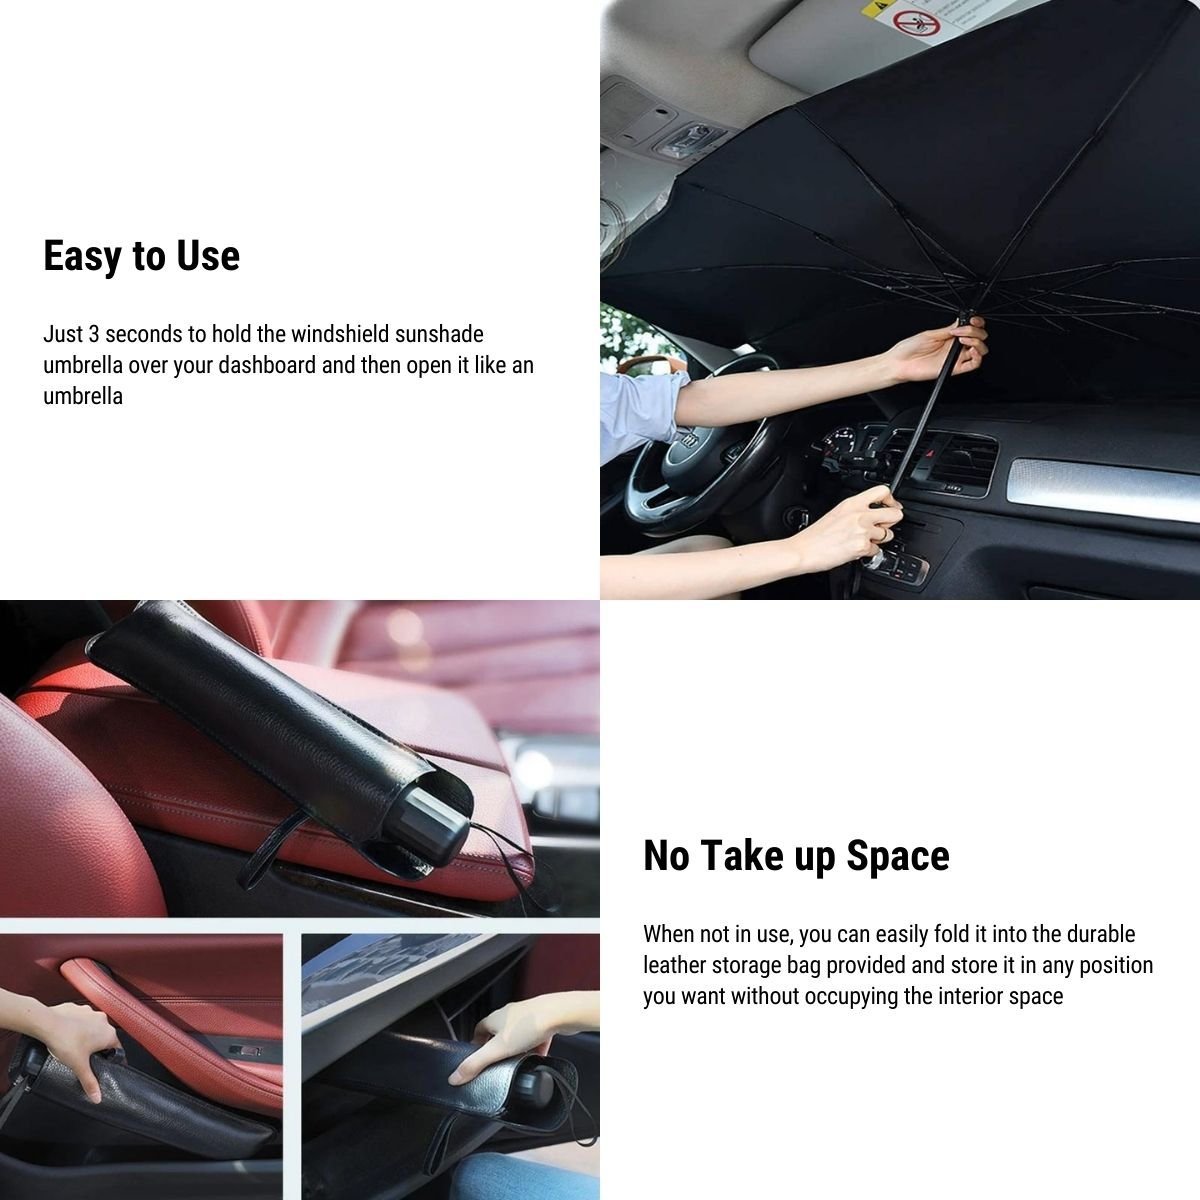 Foldable Car Front Windshield Sunshade Umbrella Block Reviews 2020 